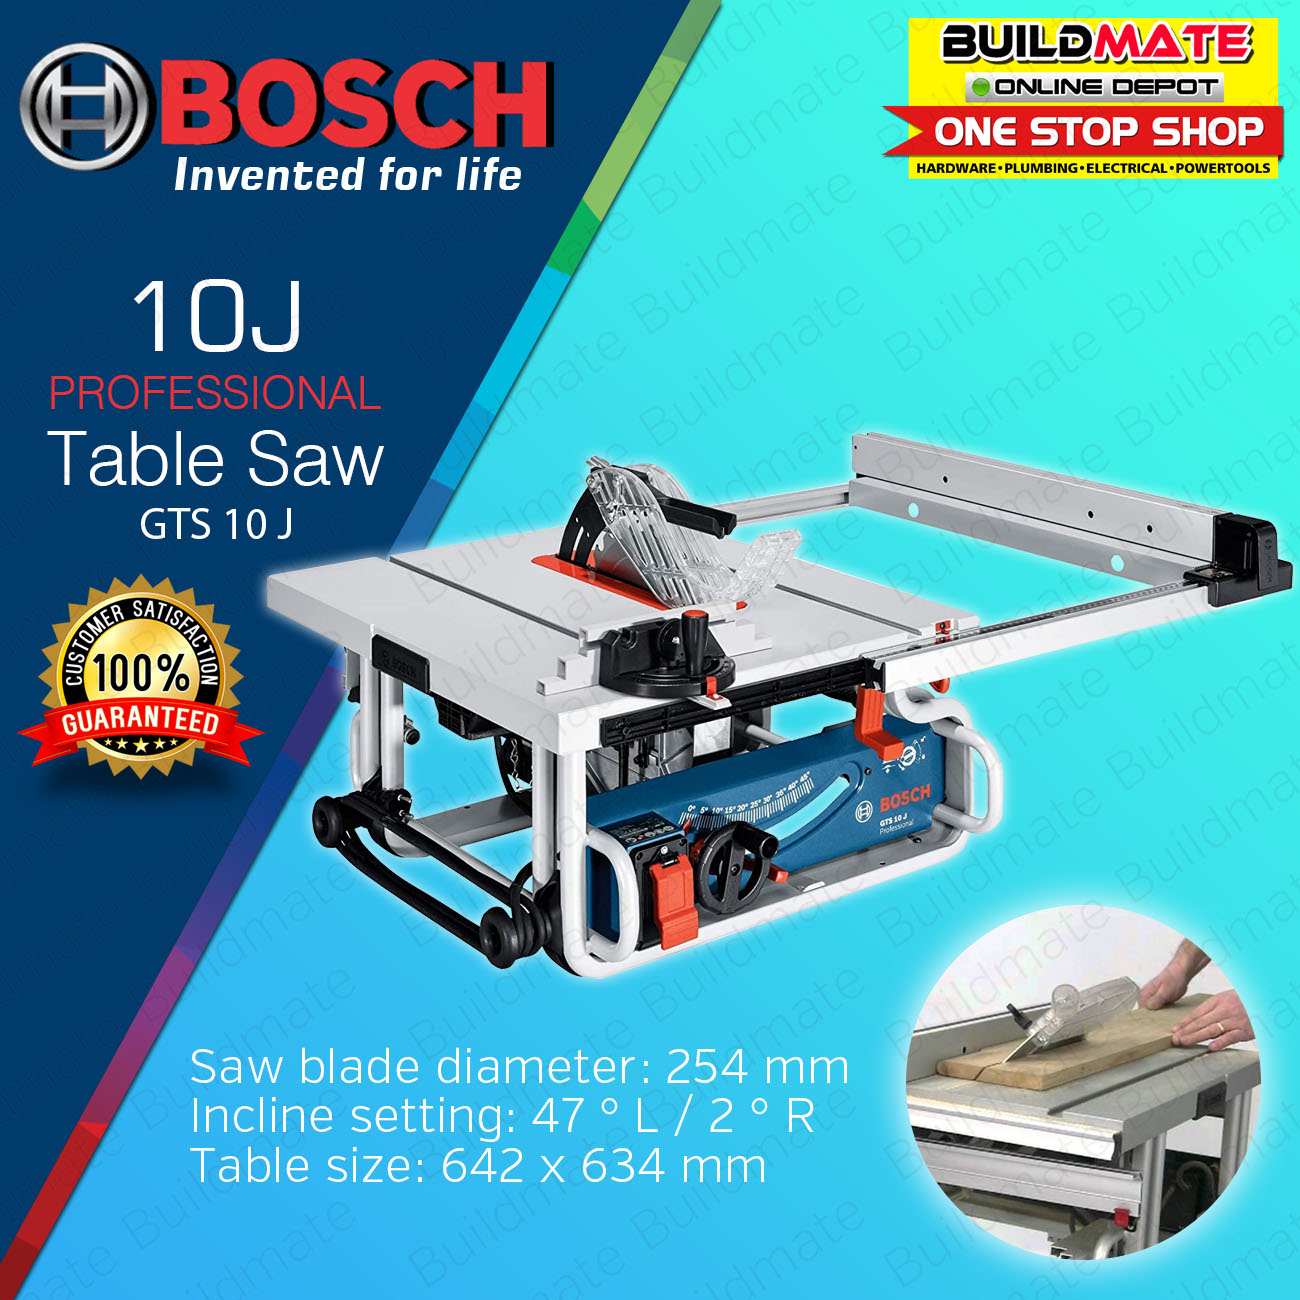 Bosch Professional Table Saw 1800w Gts 10 J Buildmate Lazada Ph